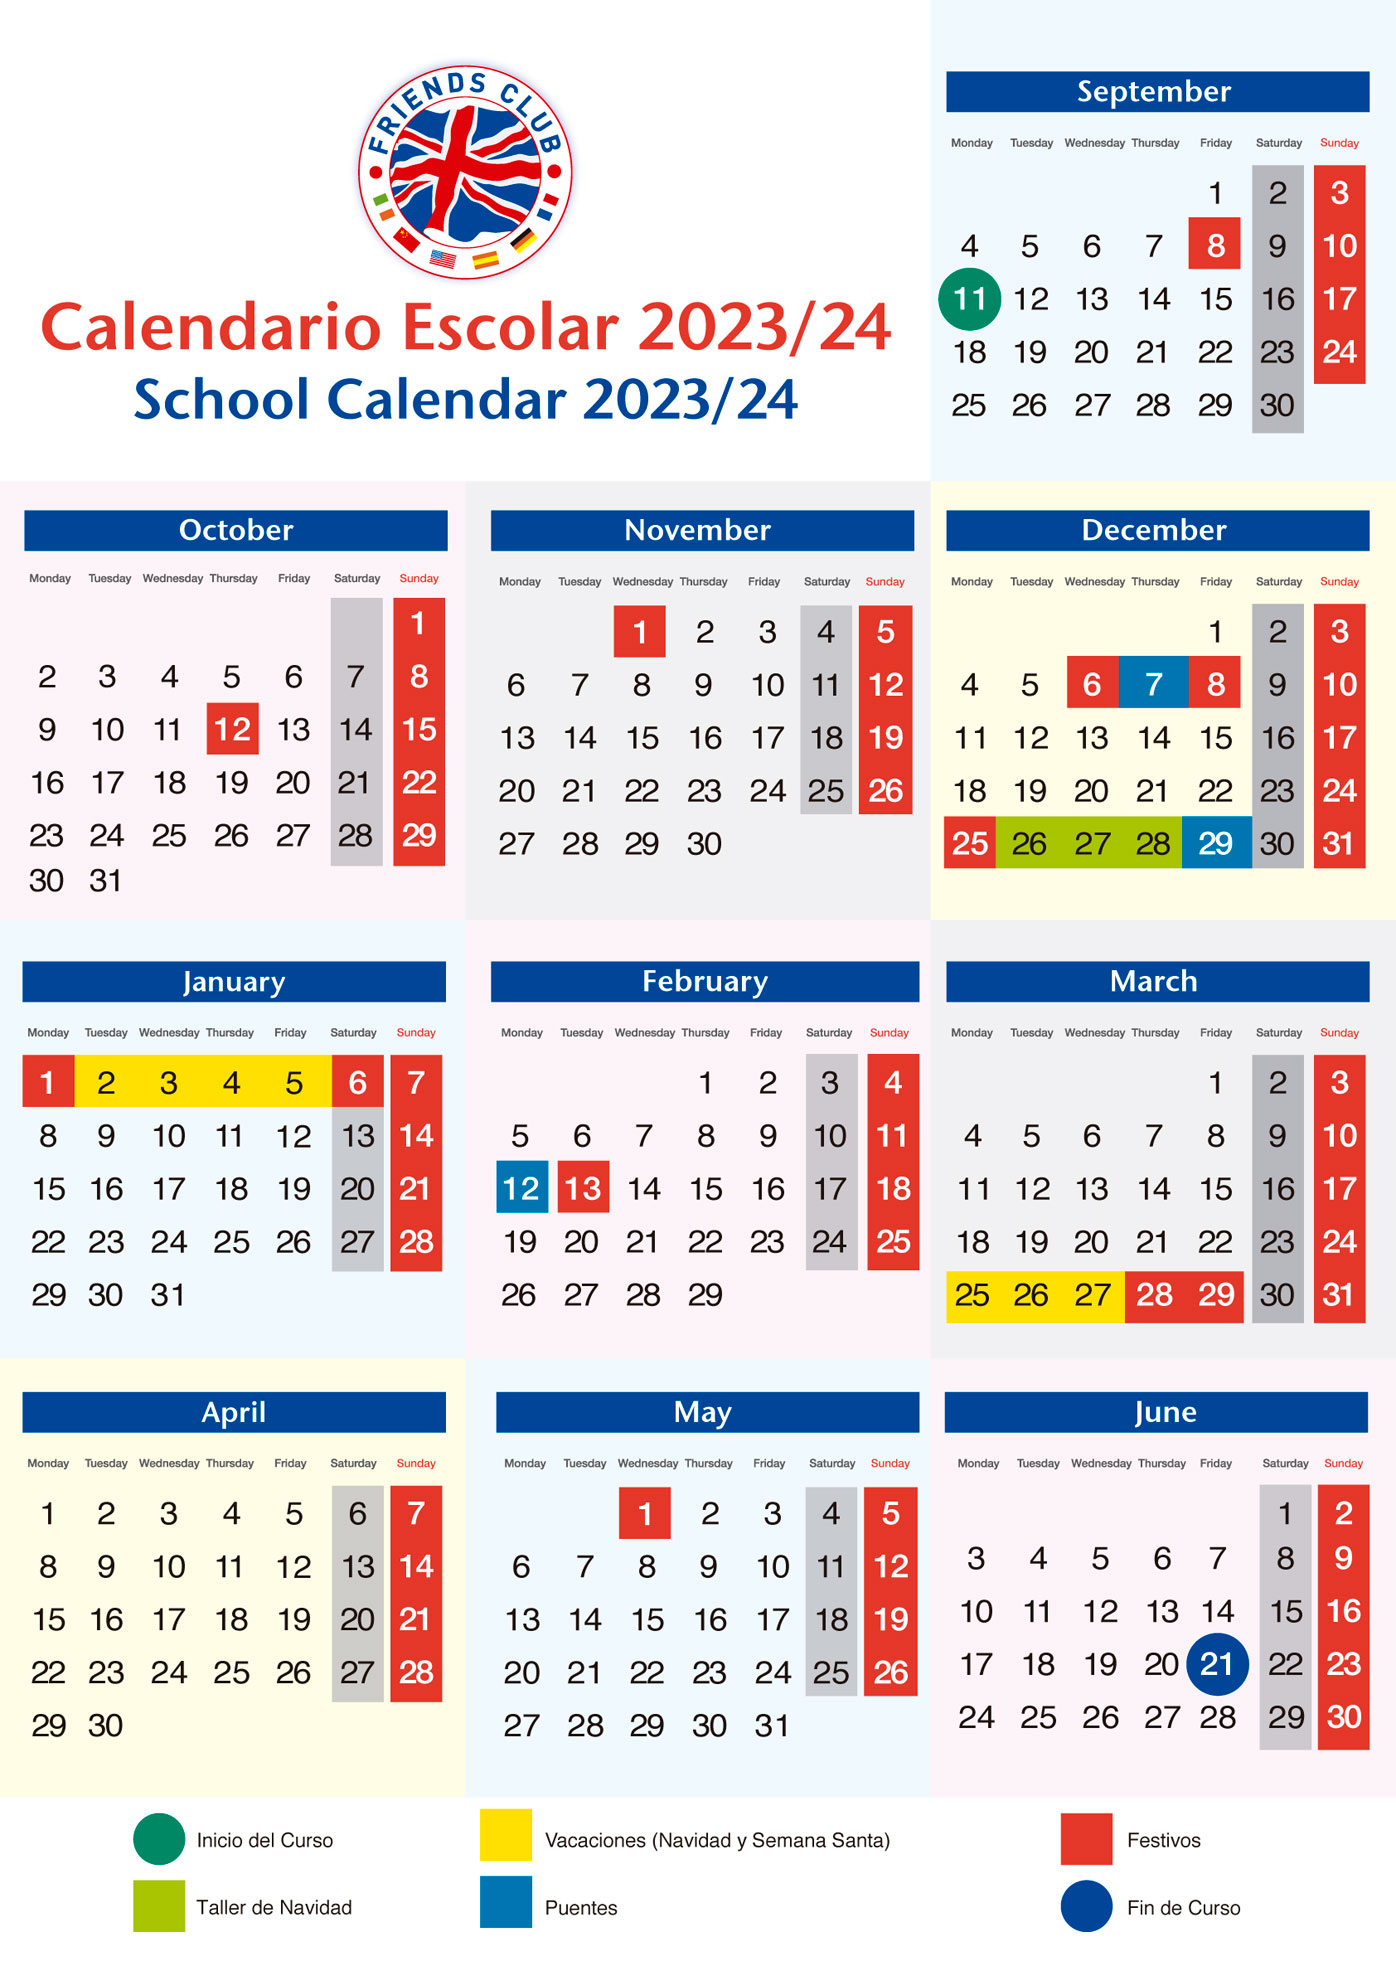 Calendario-escolar-friendsclub-gijon-23-24